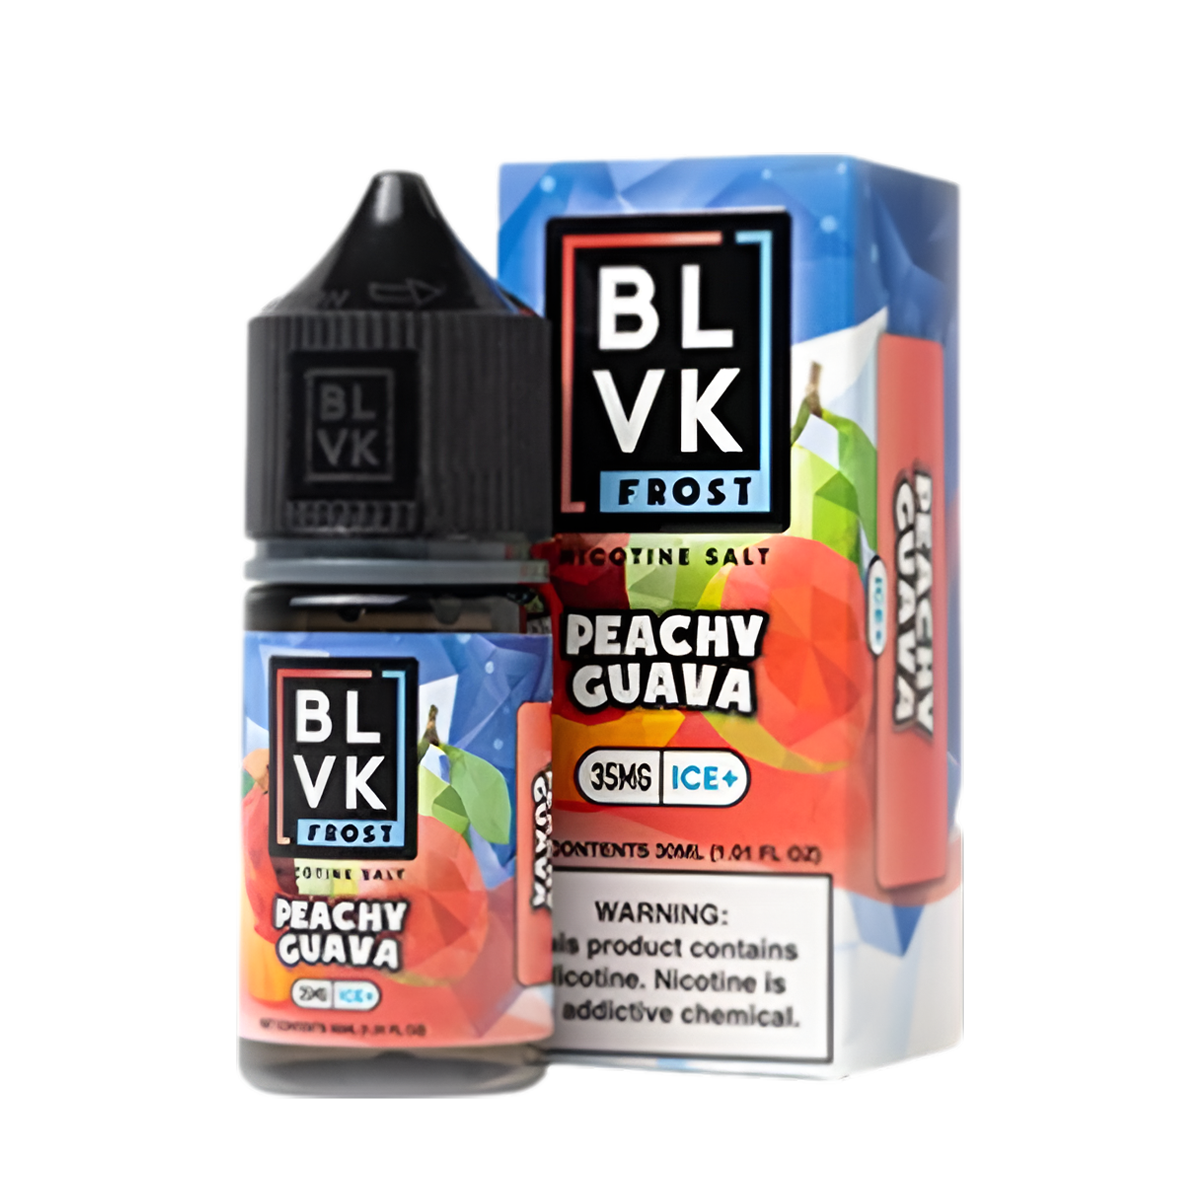 BLVK Frost Salt Nicotine Vape Juice 35 Mg 30 Ml Peachy Guava Ice